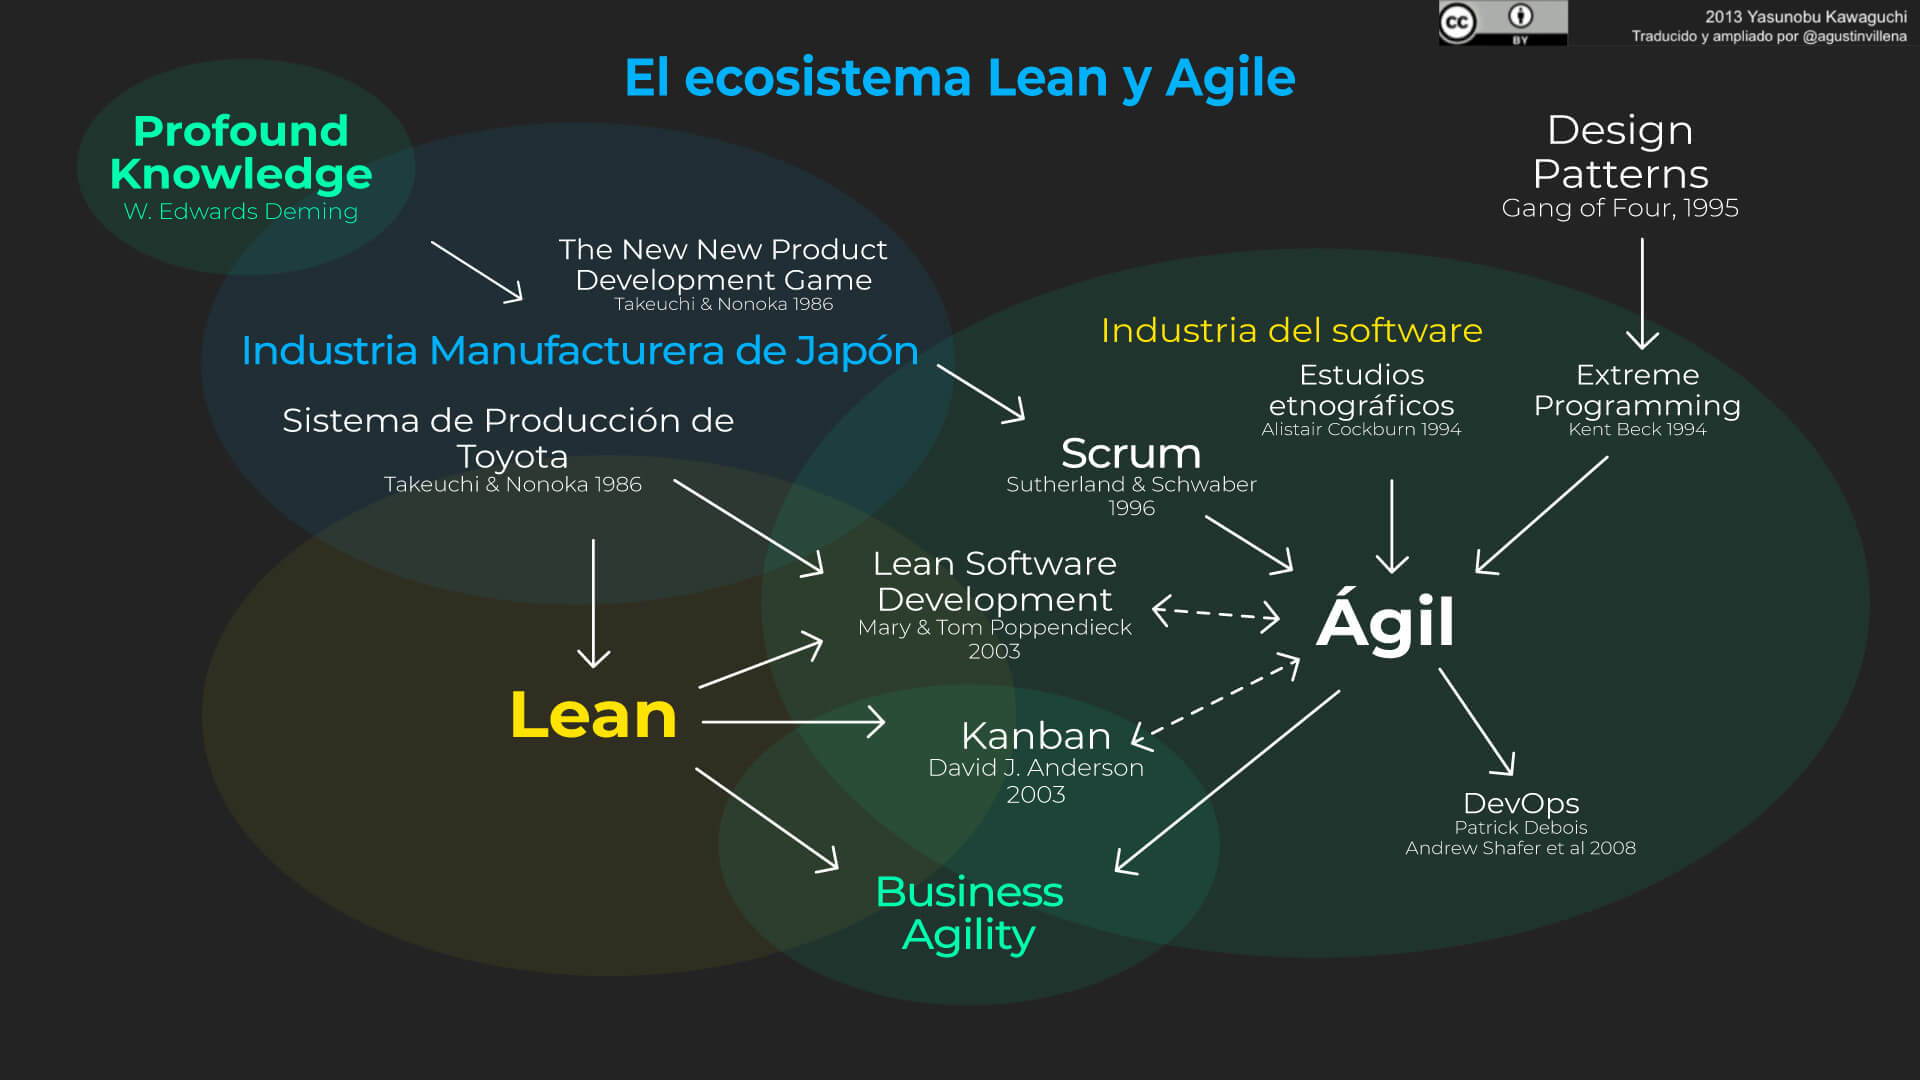 Ecosistema Lean+Agil